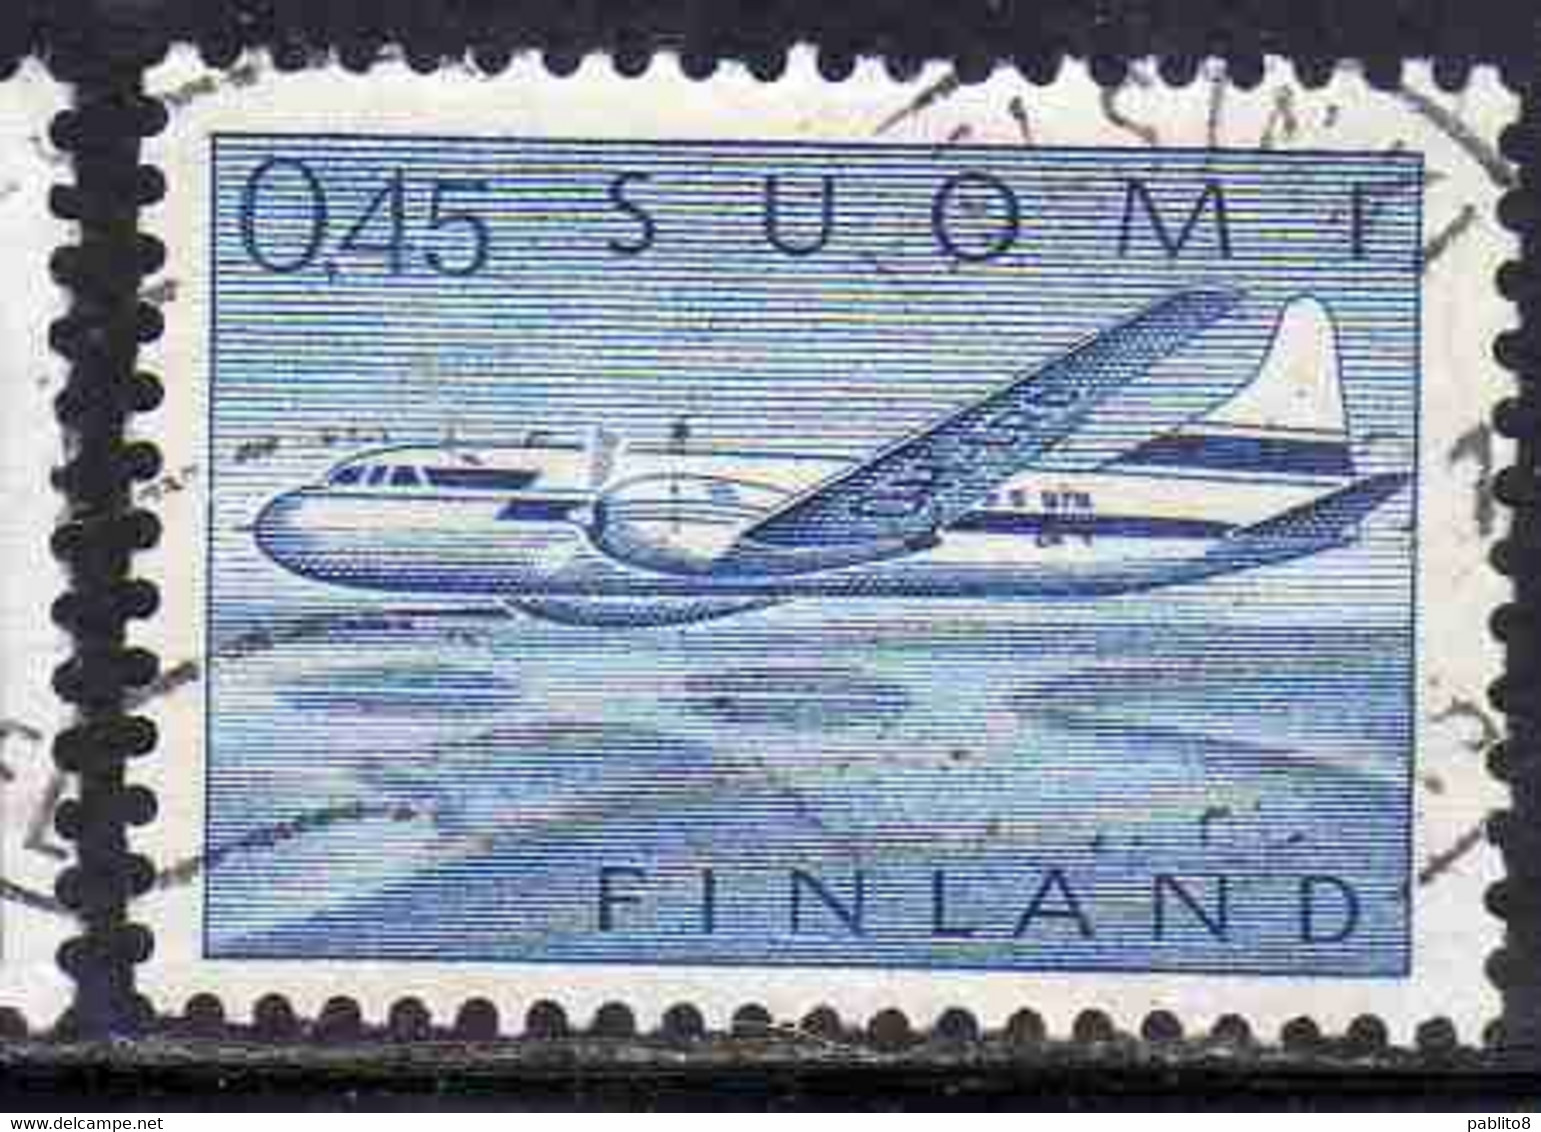 SUOMI FINLAND FINLANDIA FINLANDE 1963 AIR POST MAIL AIRMAIL CONVAIR OVER LAKES 0.45m 45p USED USATO OBLITERE' - Oblitérés